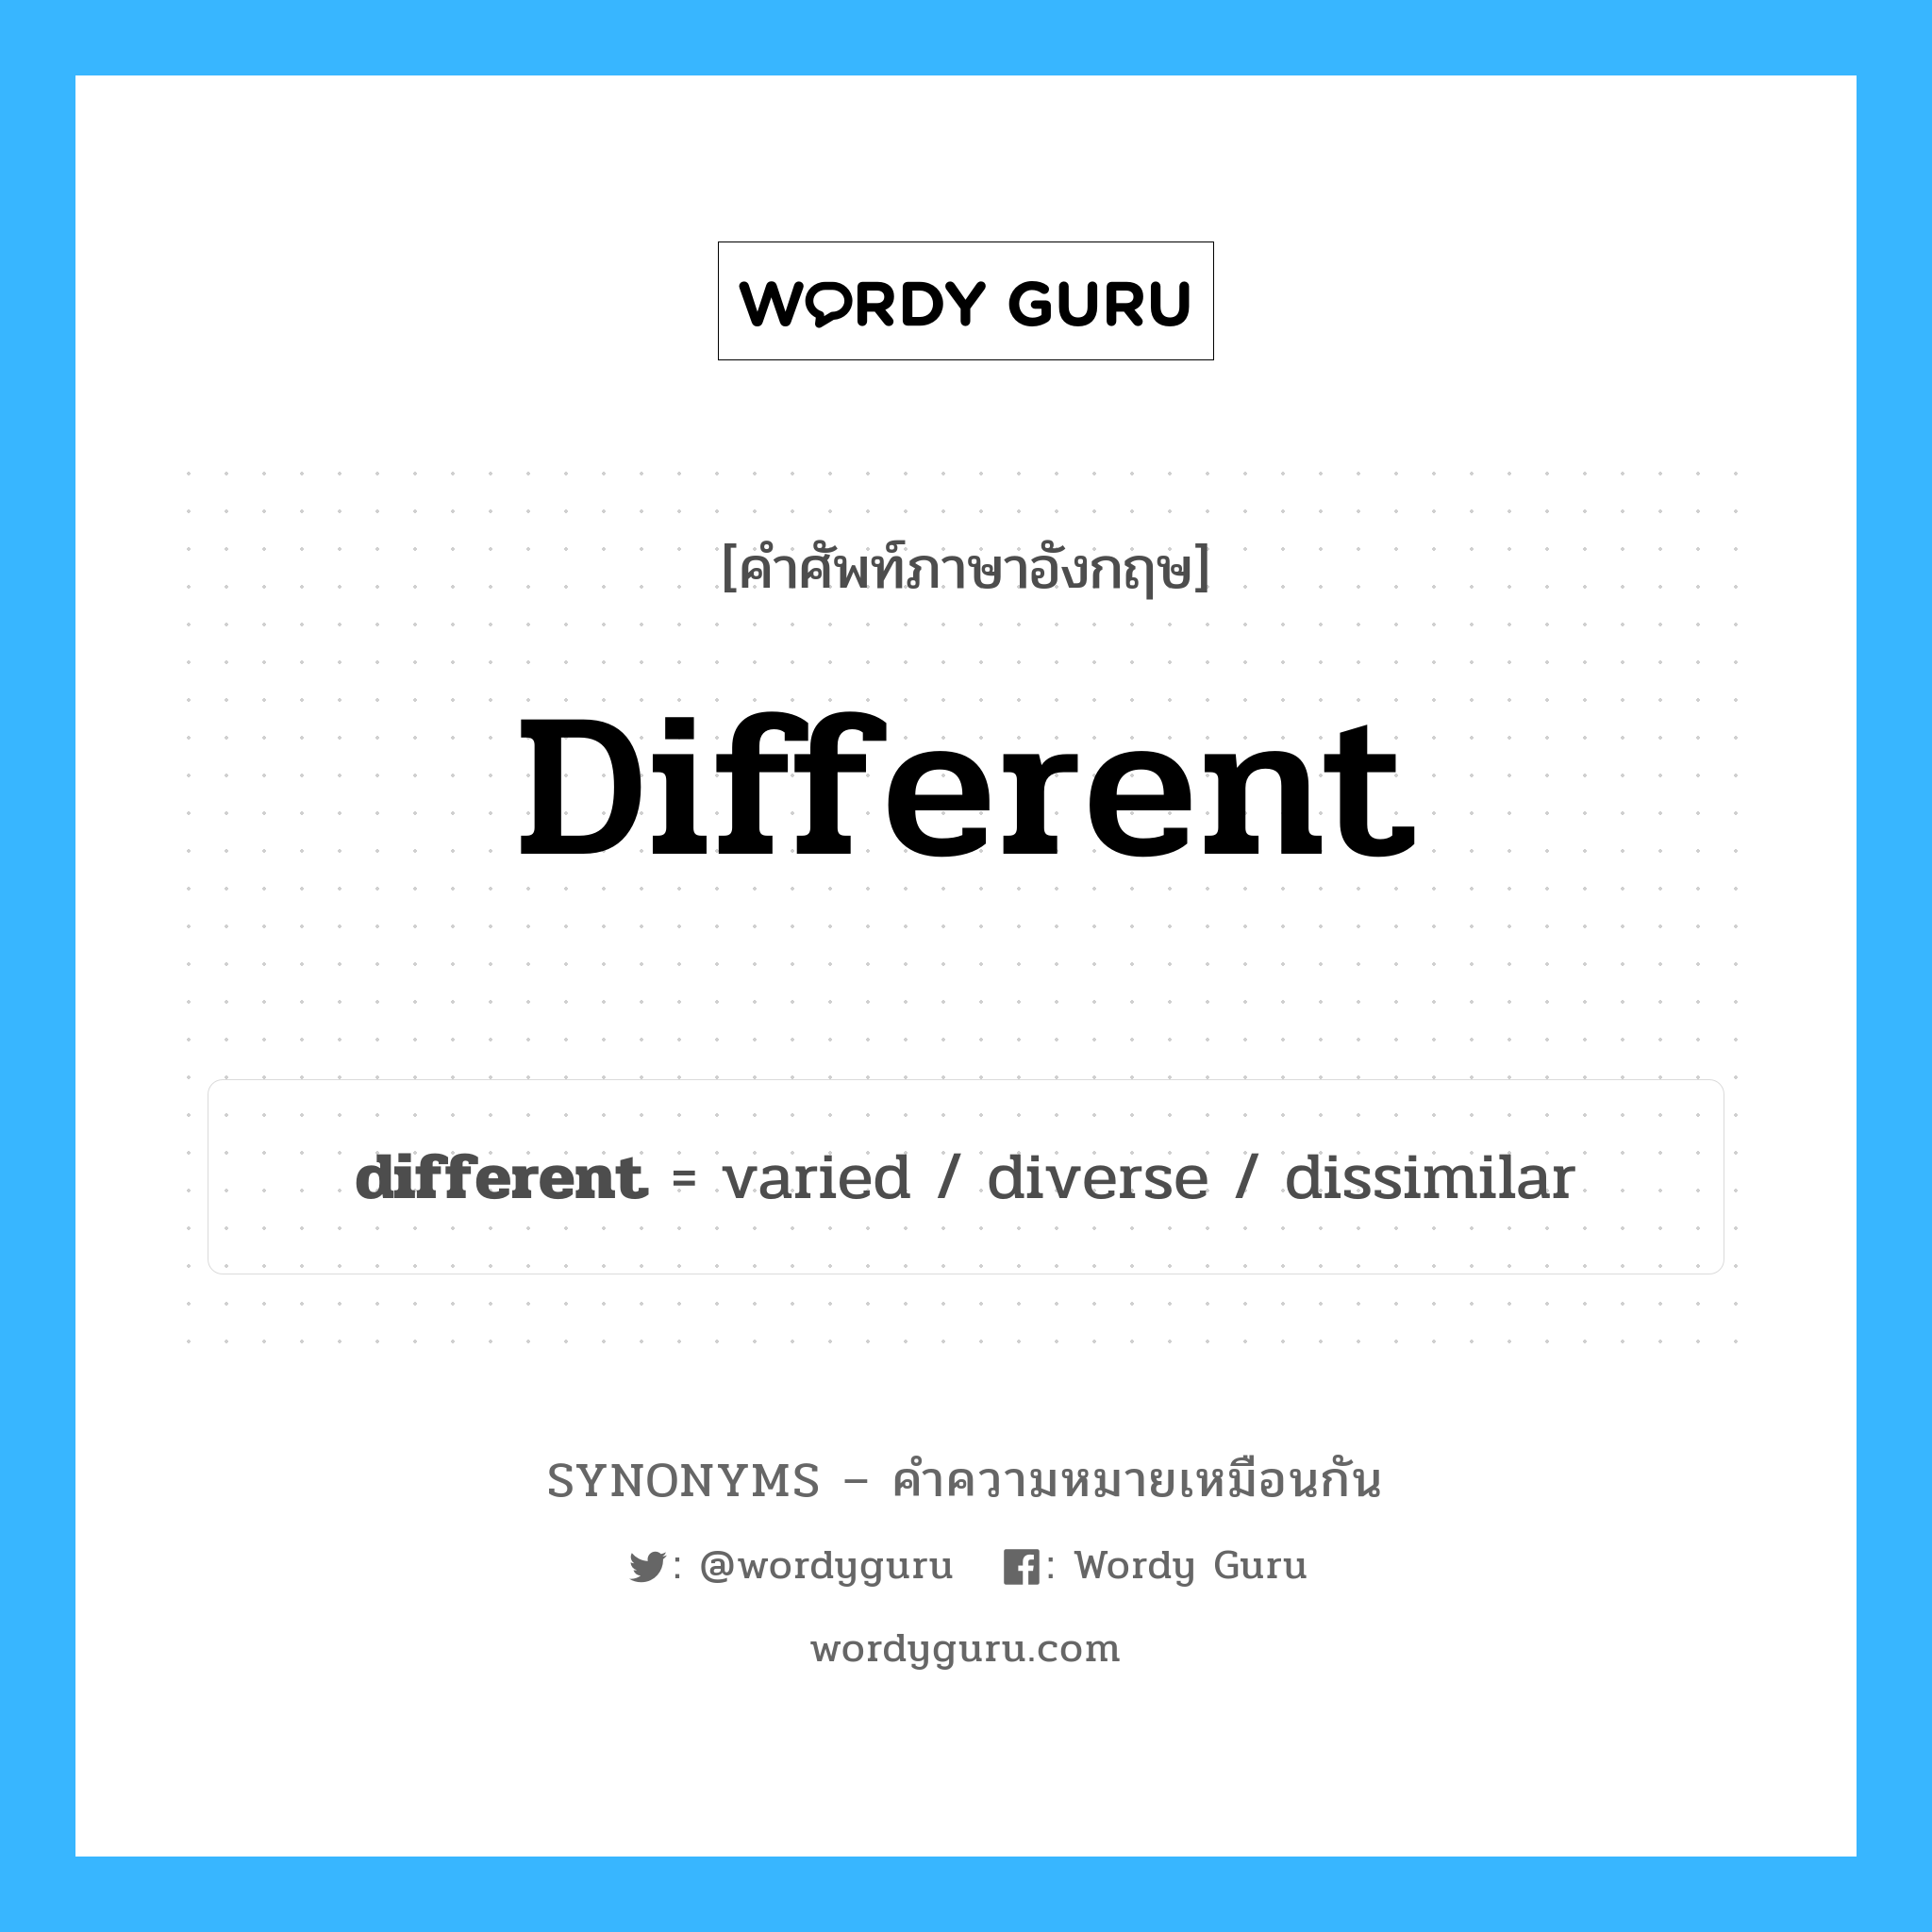 dissimilar เป็นหนึ่งใน different และมีคำอื่น ๆ อีกดังนี้, คำศัพท์ภาษาอังกฤษ dissimilar ความหมายคล้ายกันกับ different แปลว่า แตกต่างกัน หมวด different